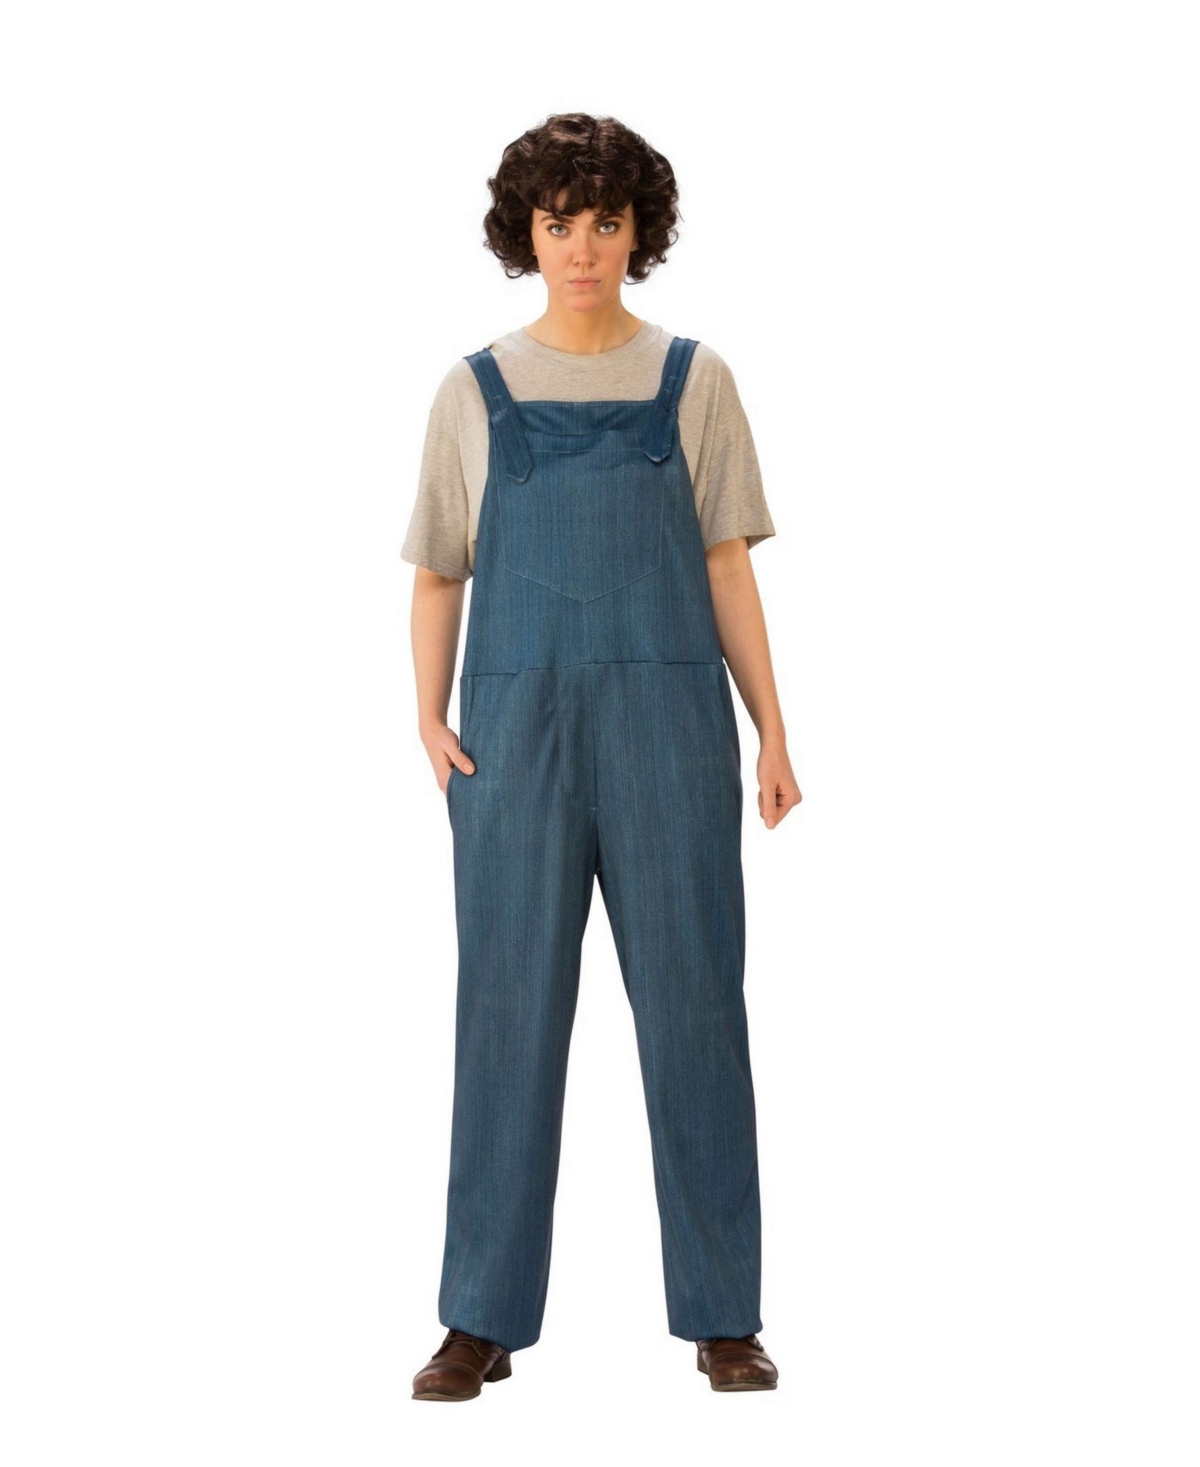 Women's Stranger Things 2 Eleven's Overalls Adult Costume - Blue